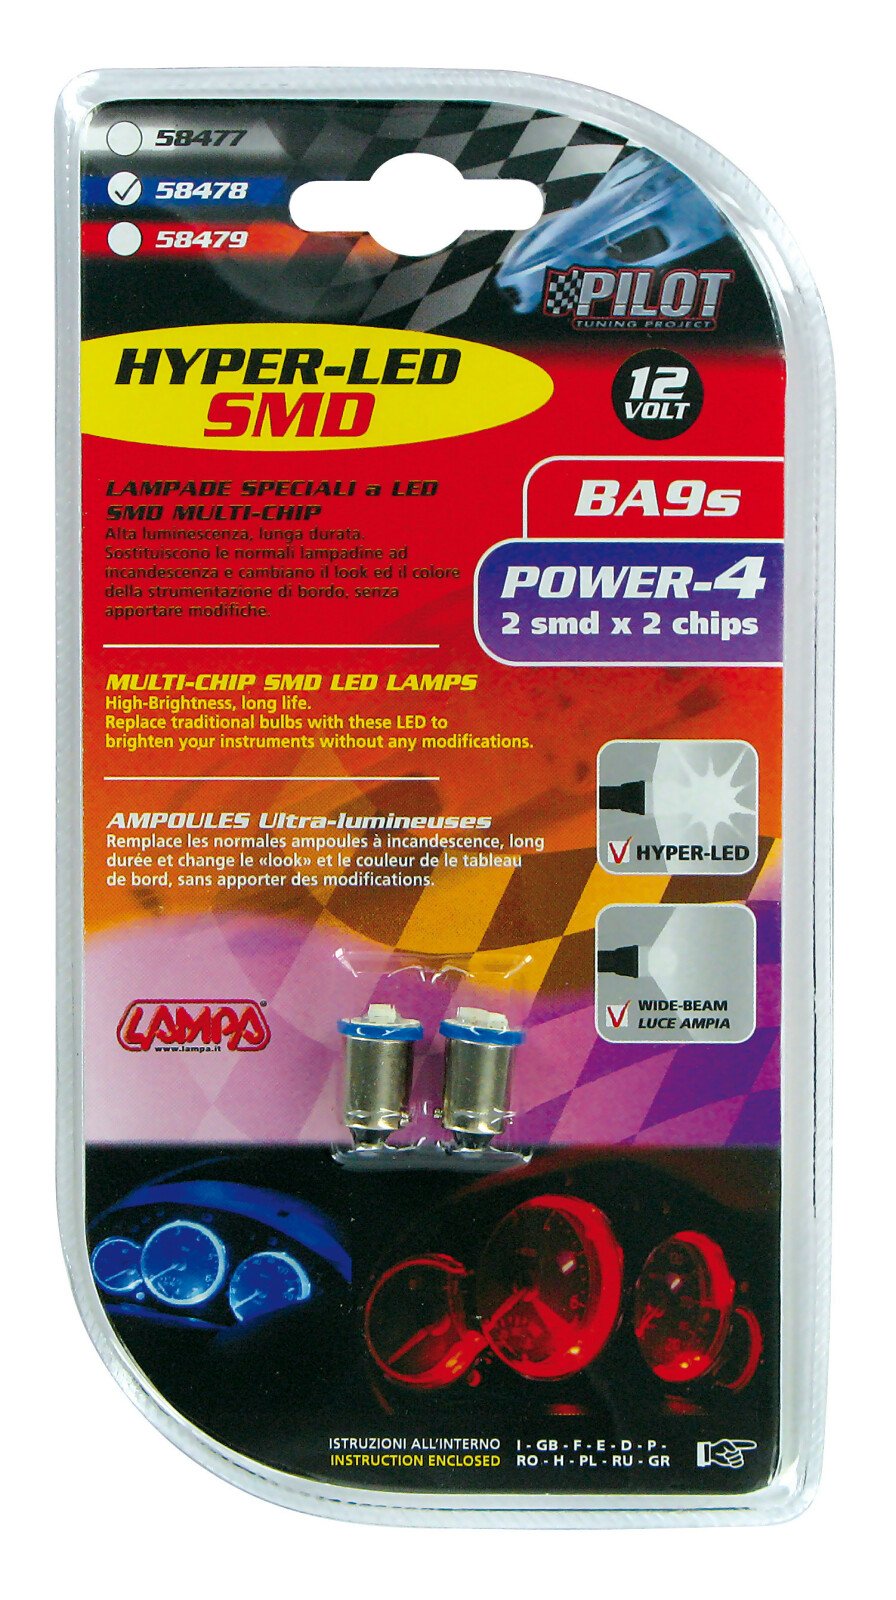 12V Hyper-Led 4 - 2 SMD x 2 chips - BA9s - 2 pcs - Blue thumb